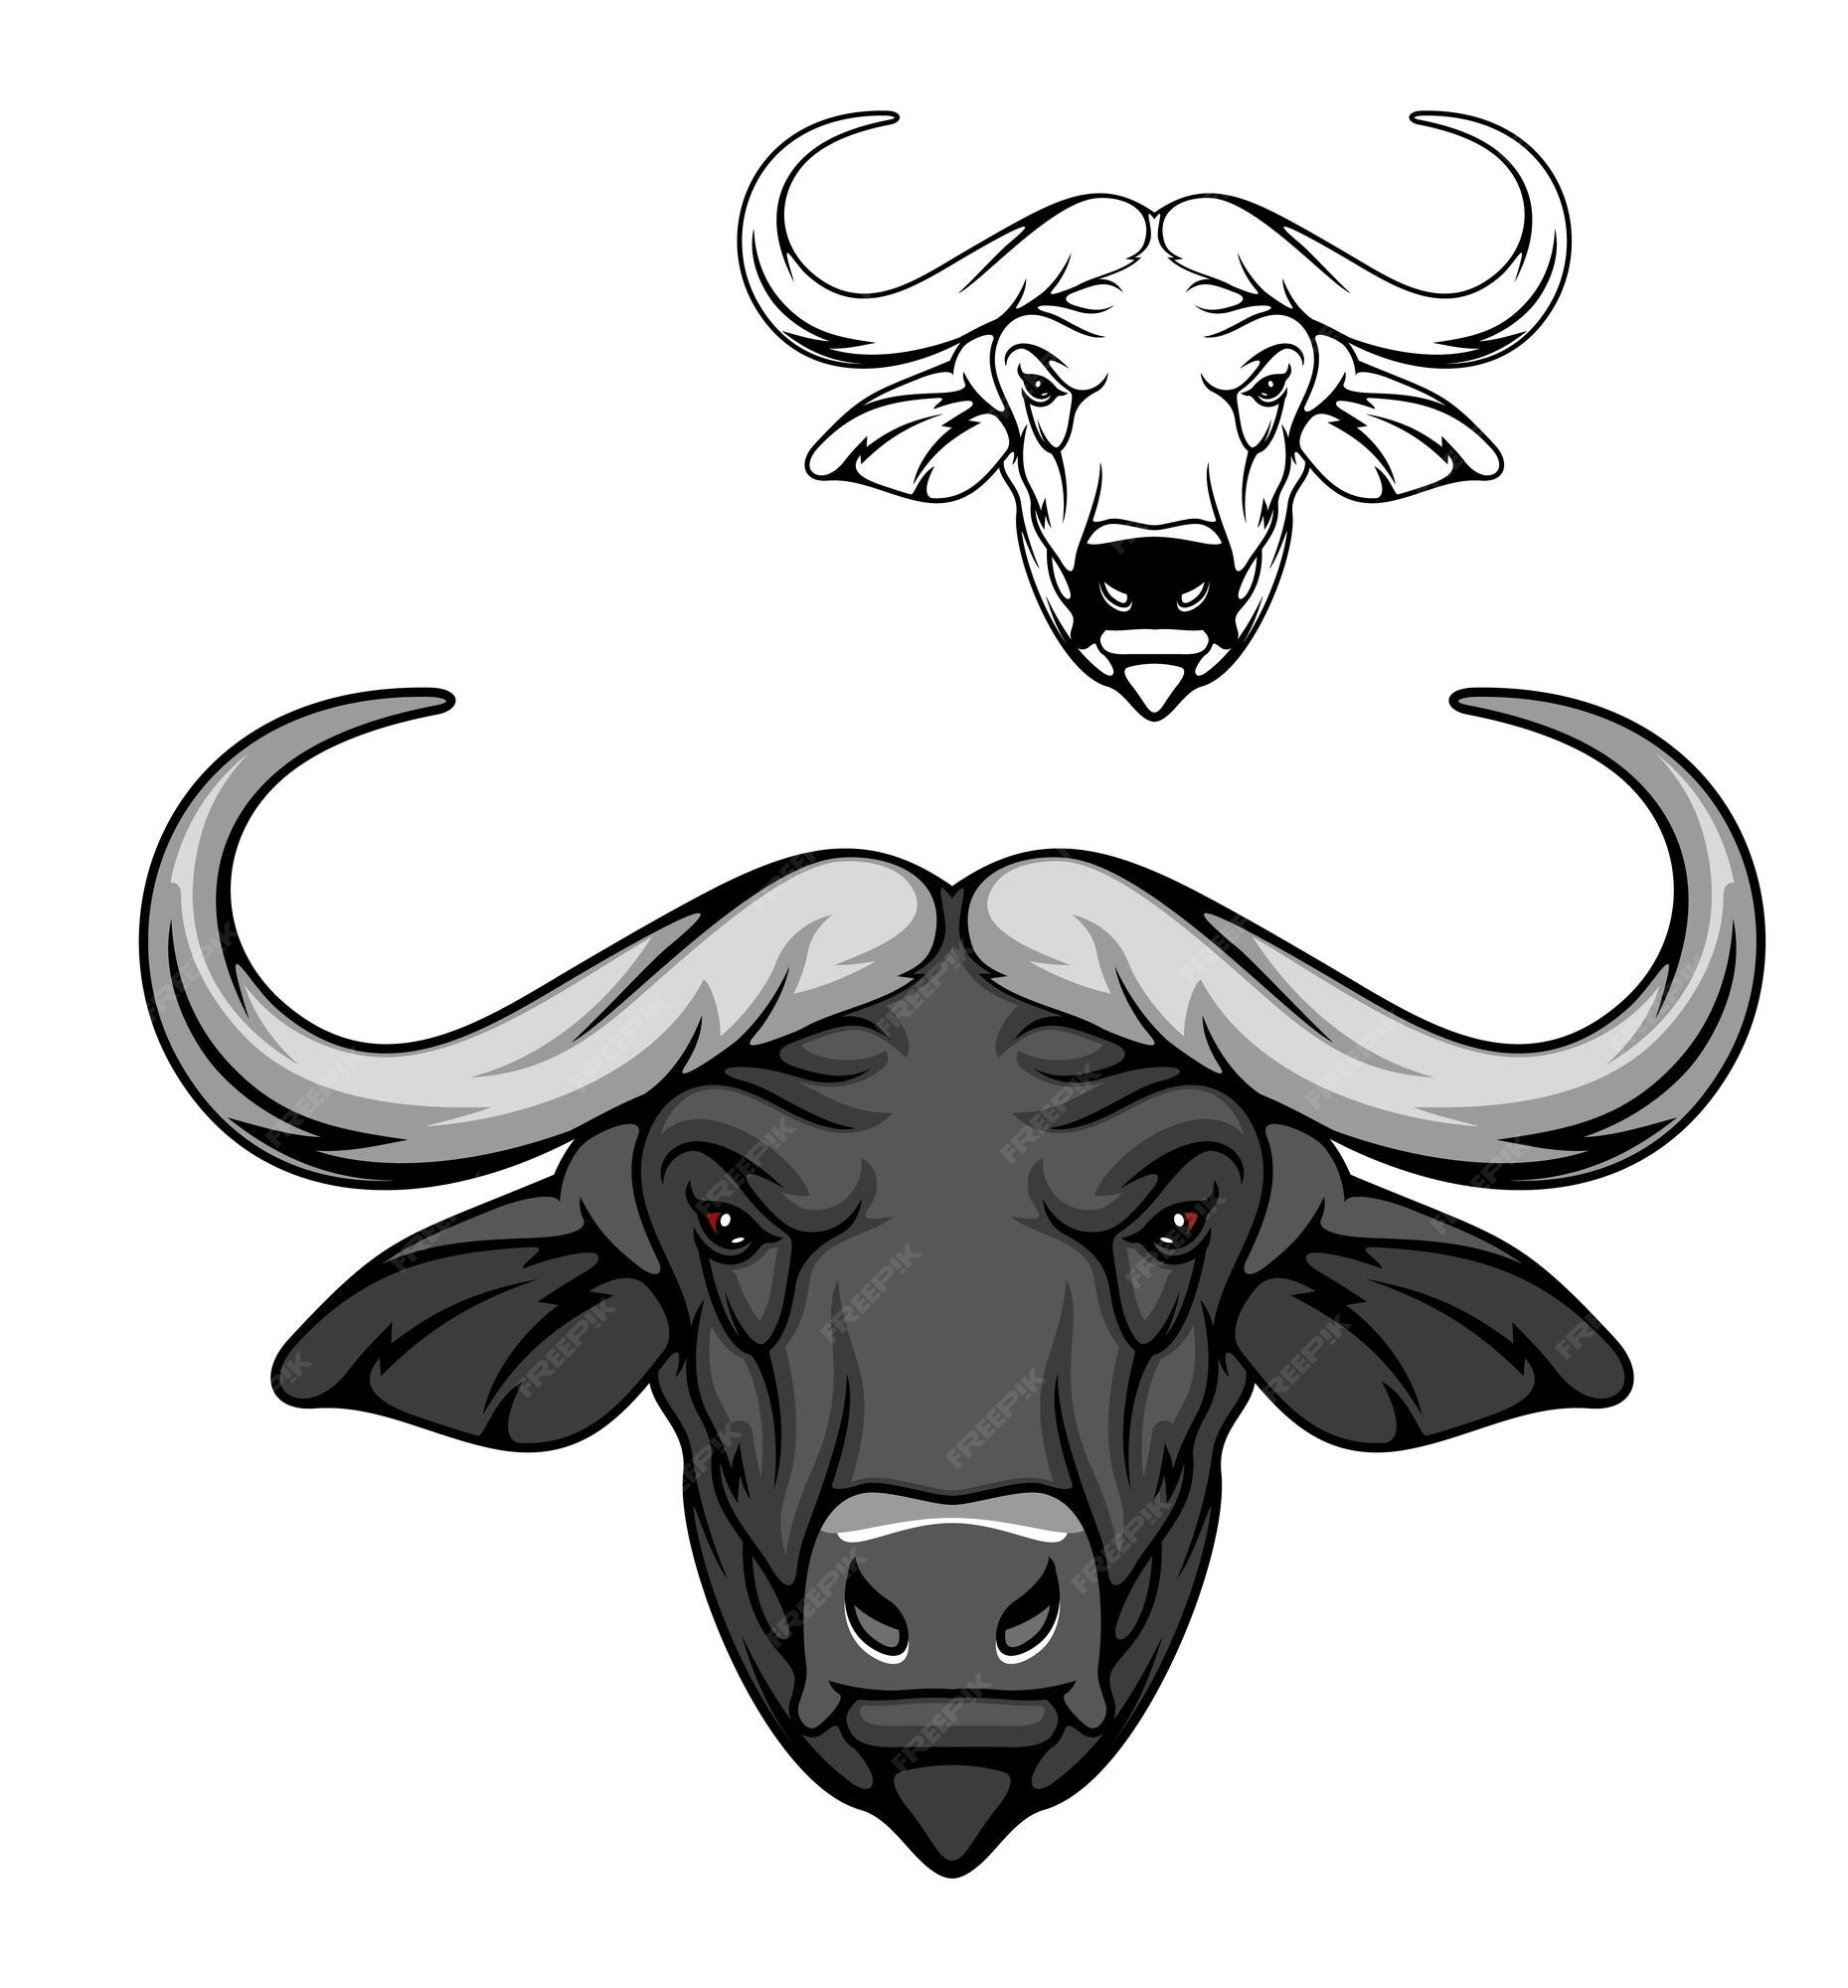 Premium Vector | Buffalo bull head icon wild animal mascot